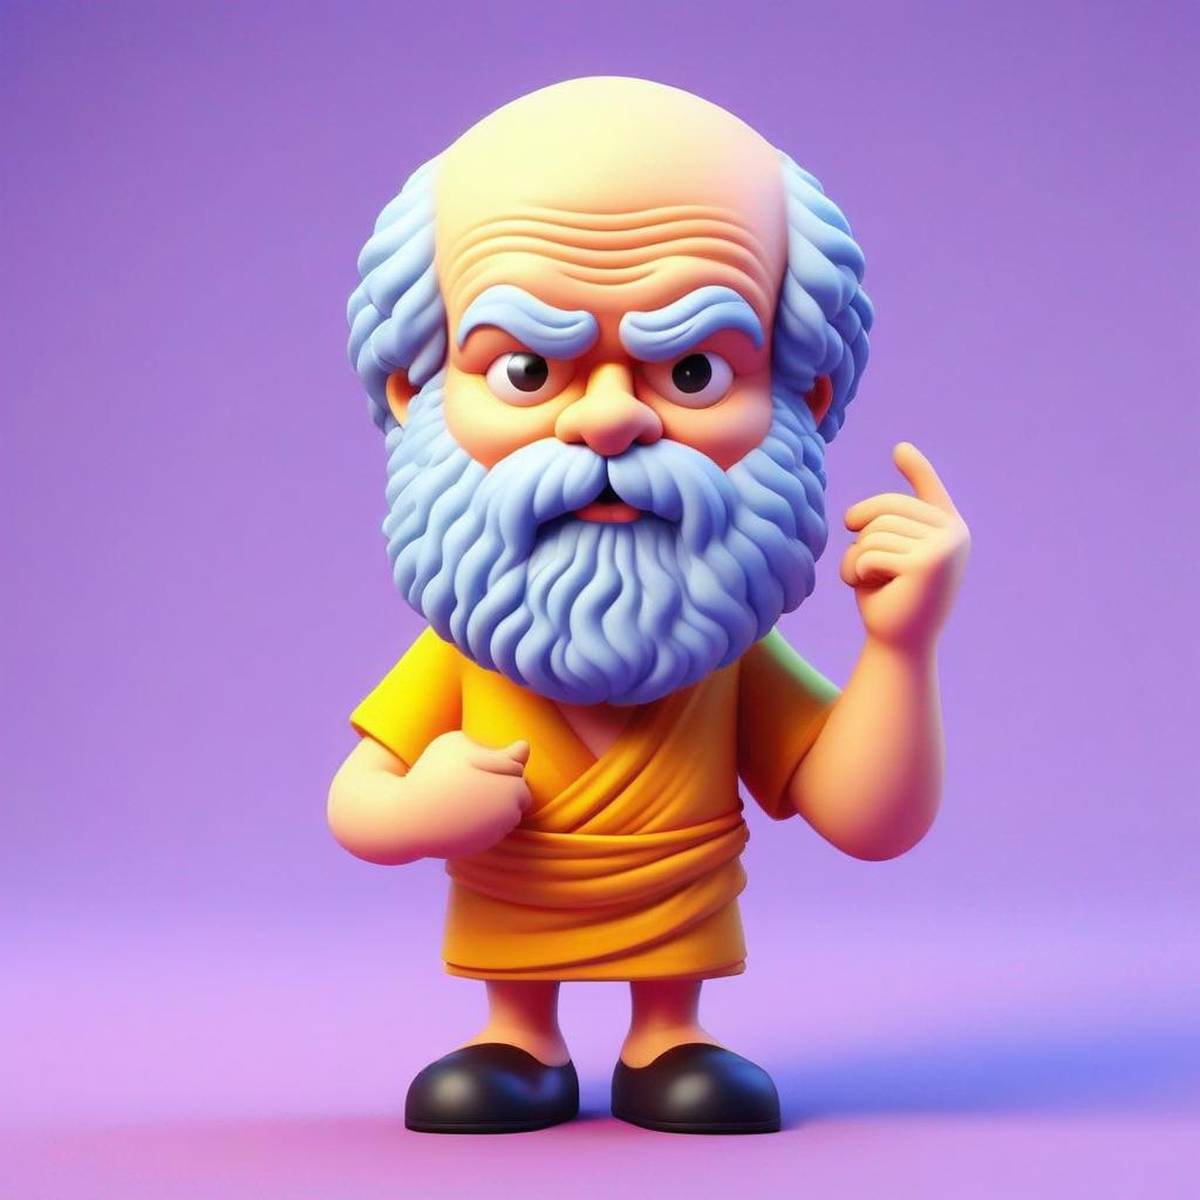 Socrates puns